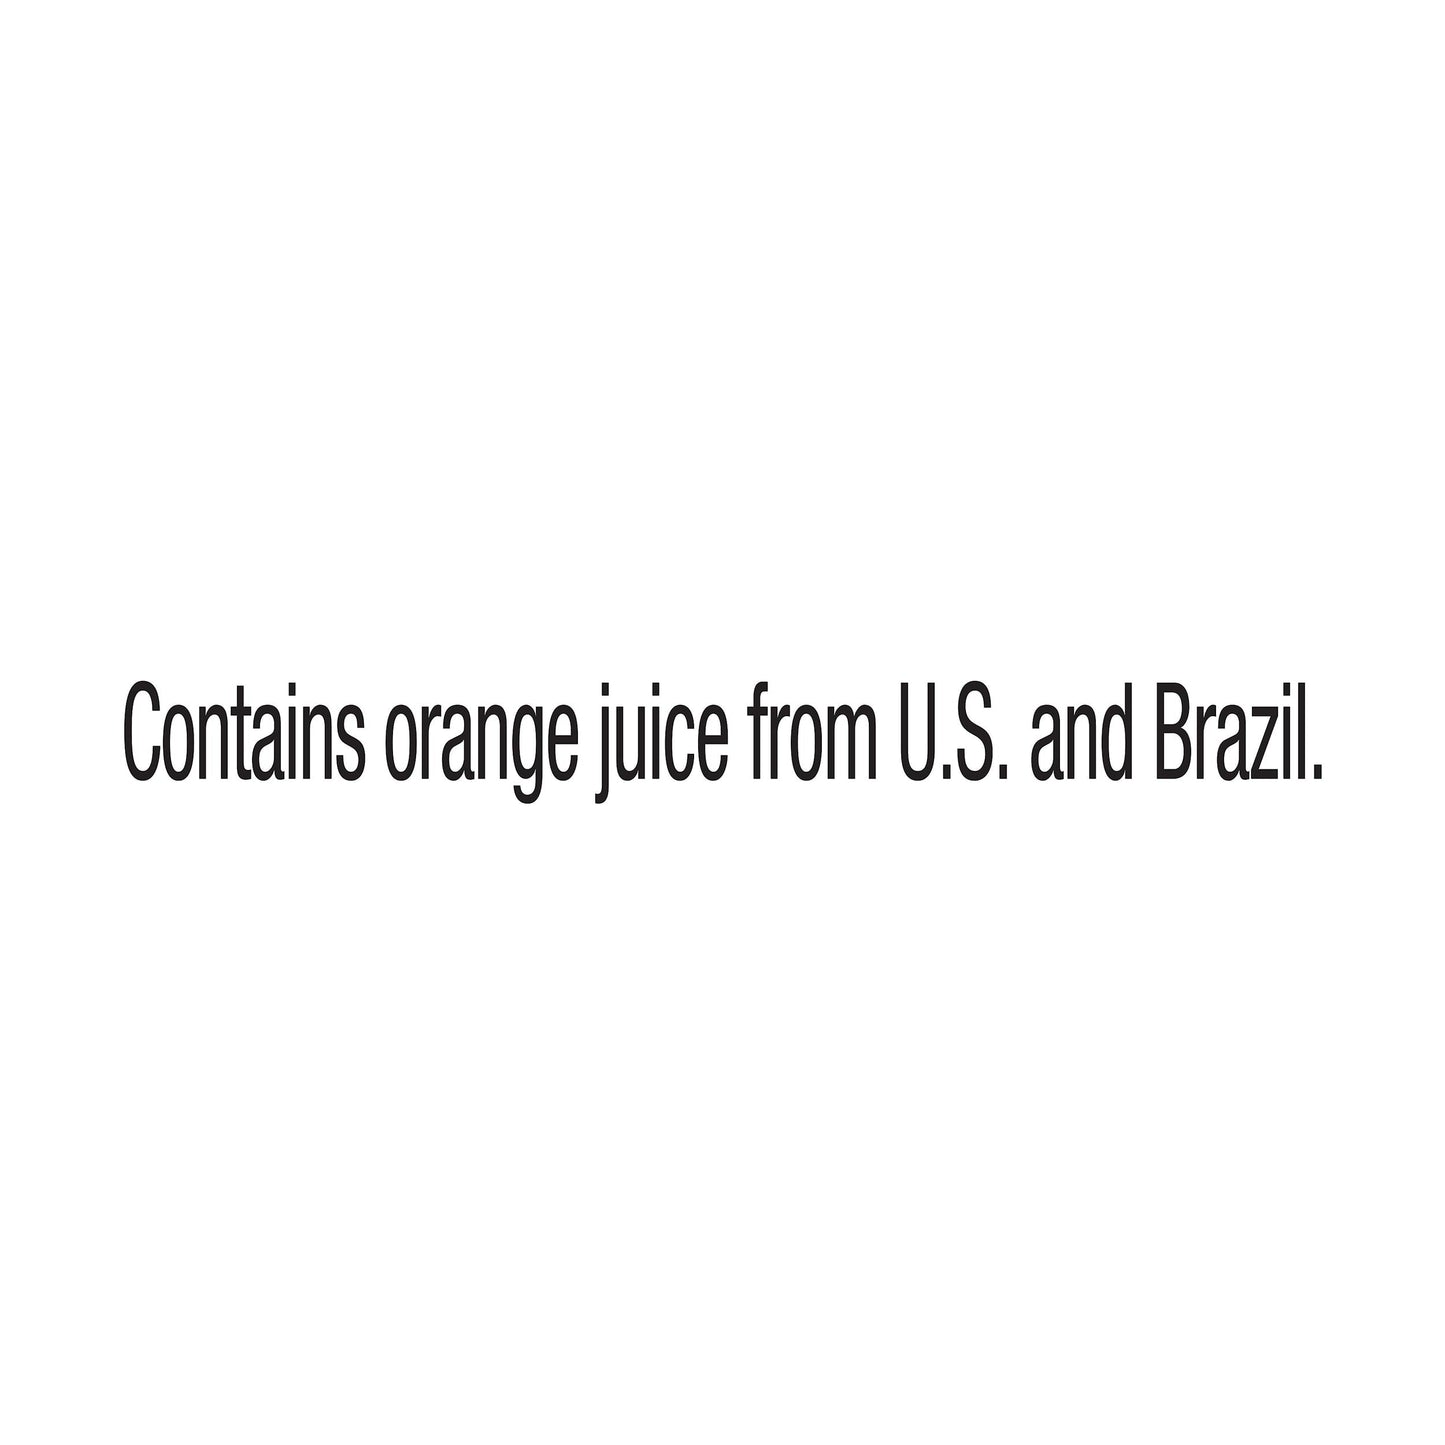 Tropicana Pure Premium, Homestyle Some Pulp 100% Orange Juice, 89 oz Jug